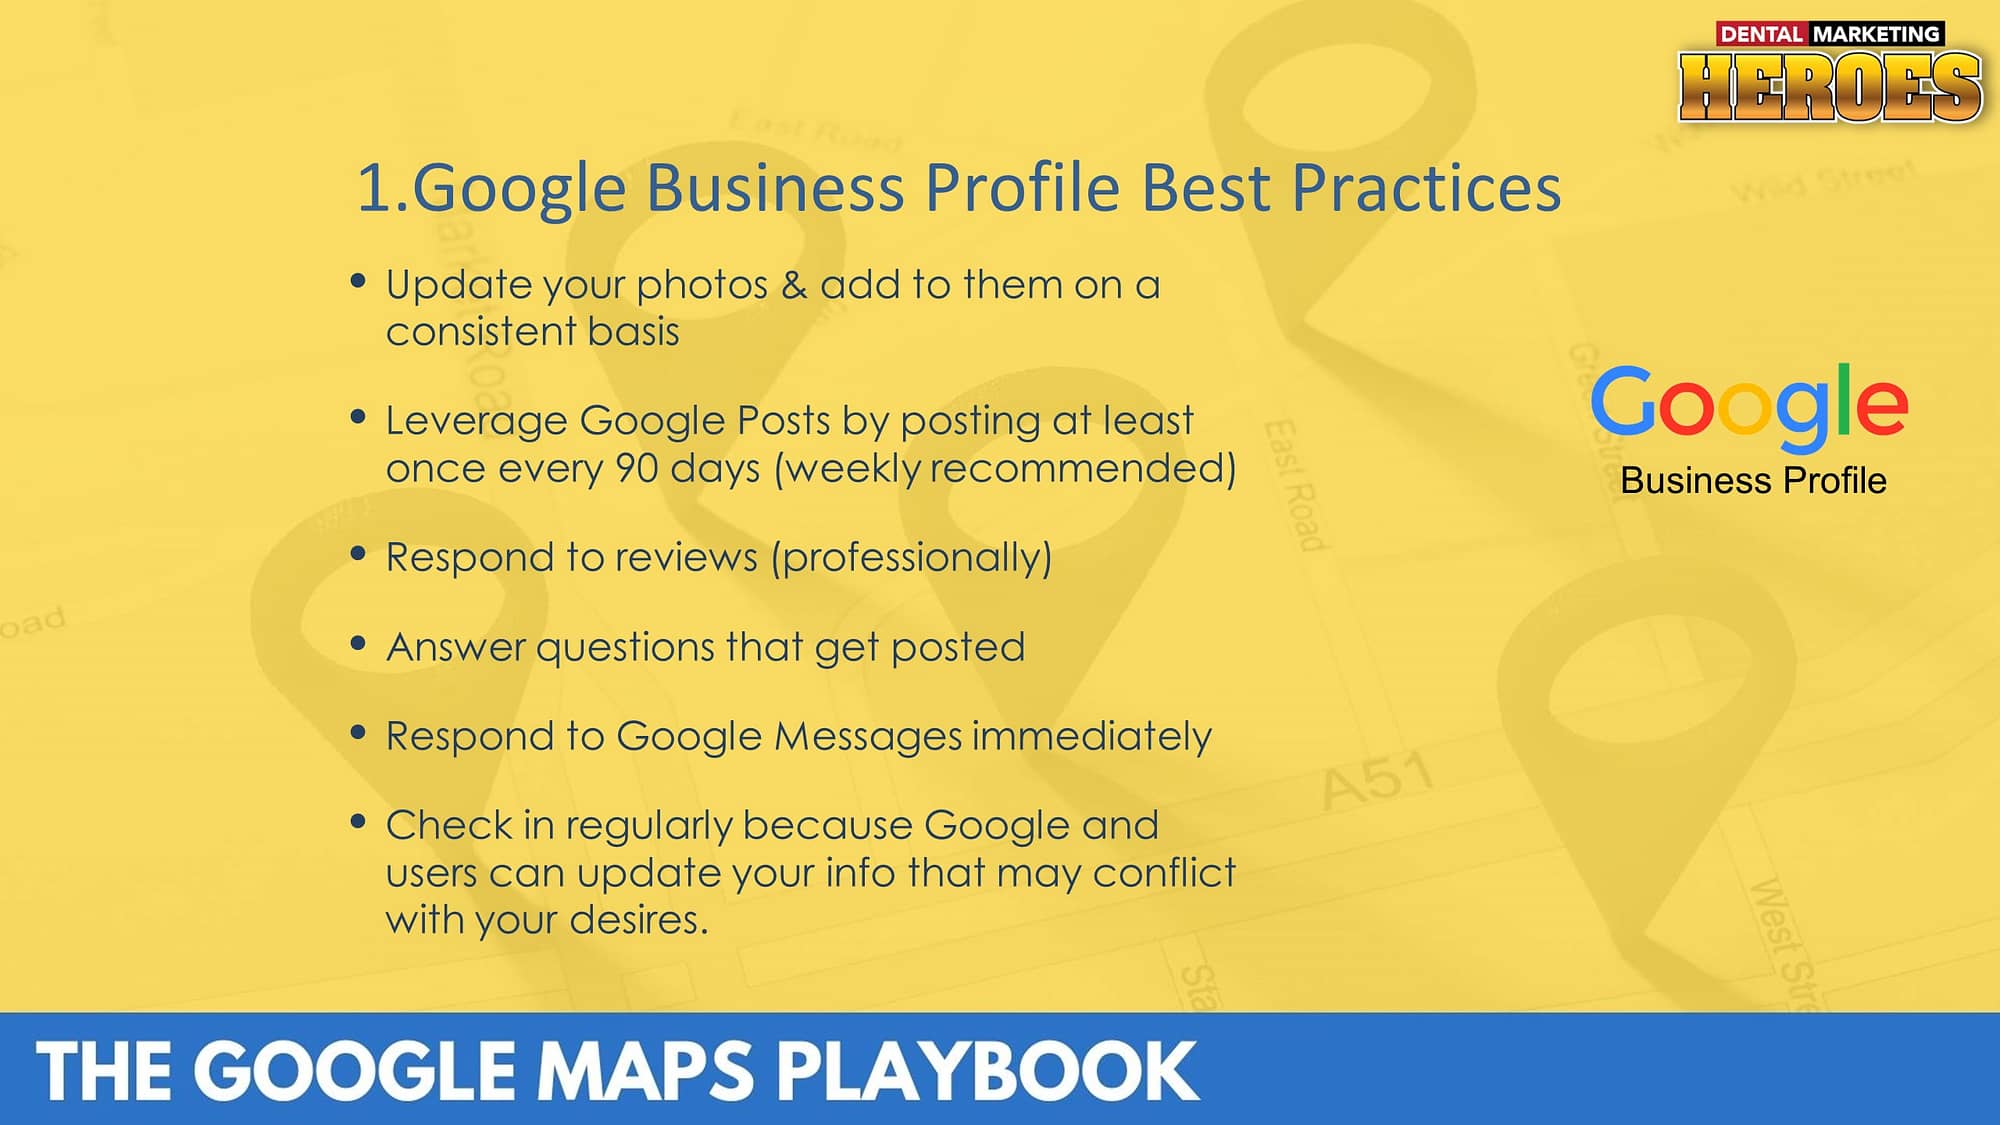 Google Business Profile best practices